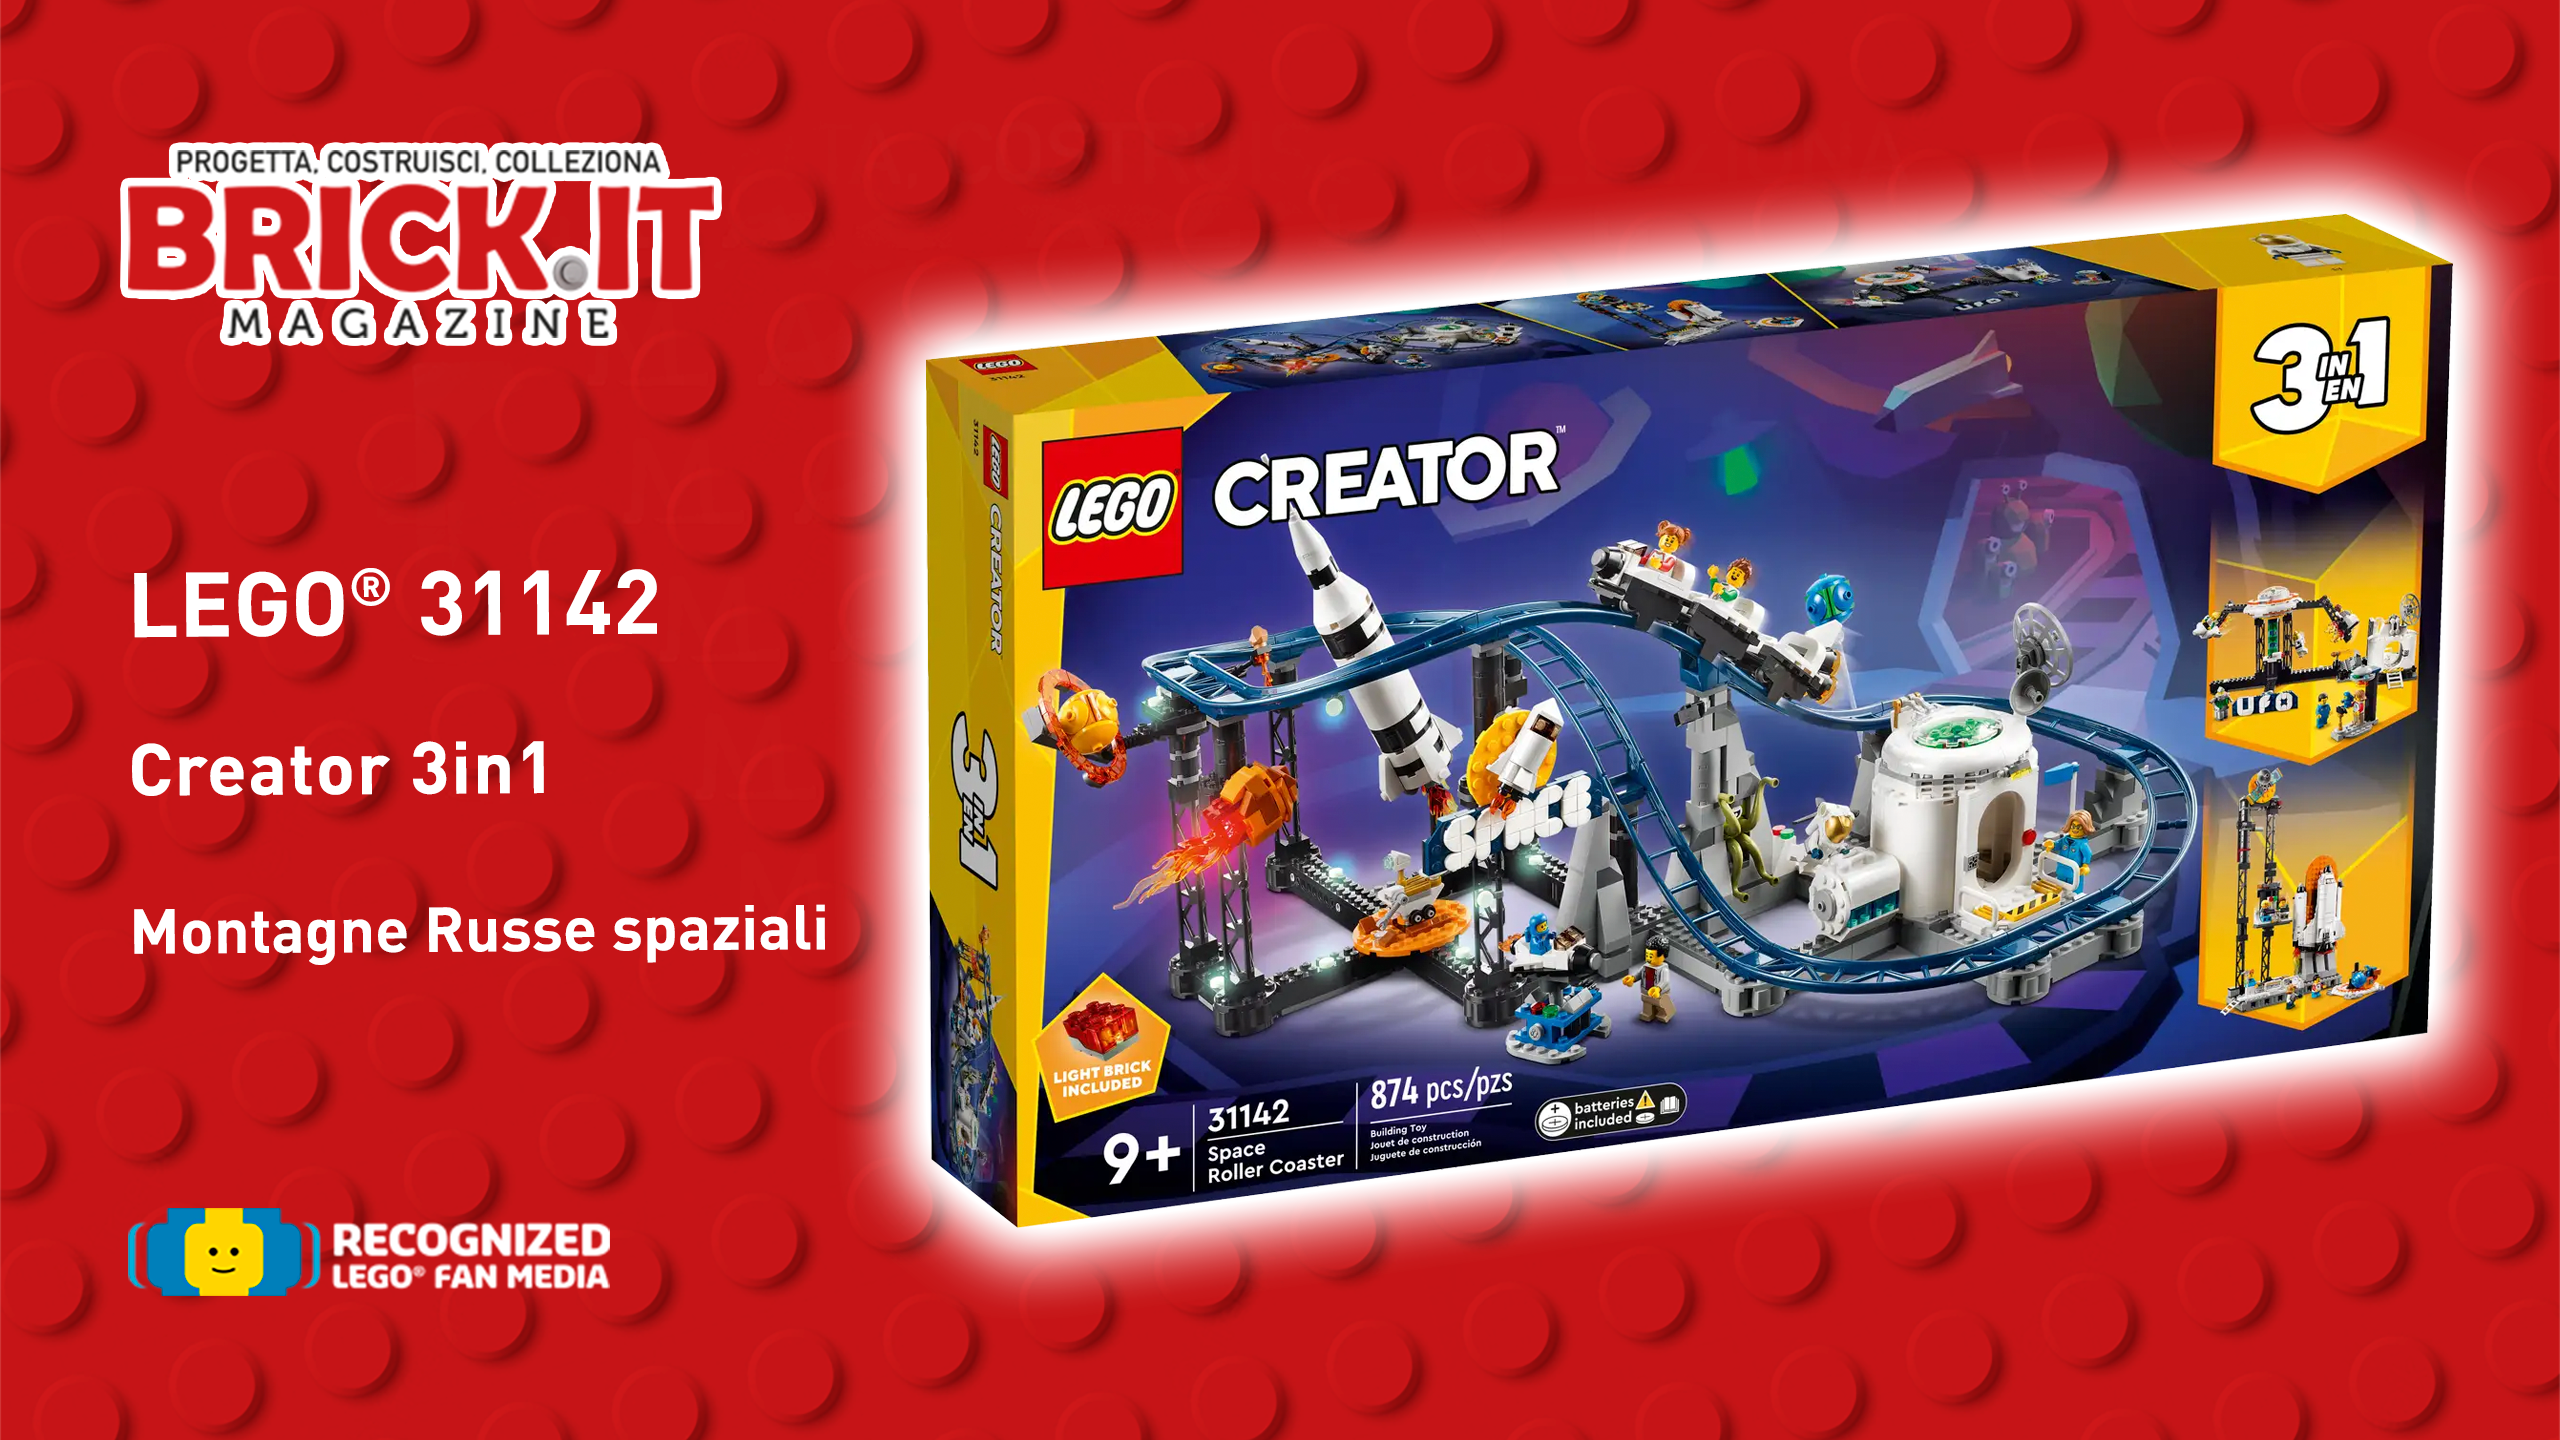 LEGO® 31142 – CREATOR 3 IN 1 – Space Roller Coaster – Recensione